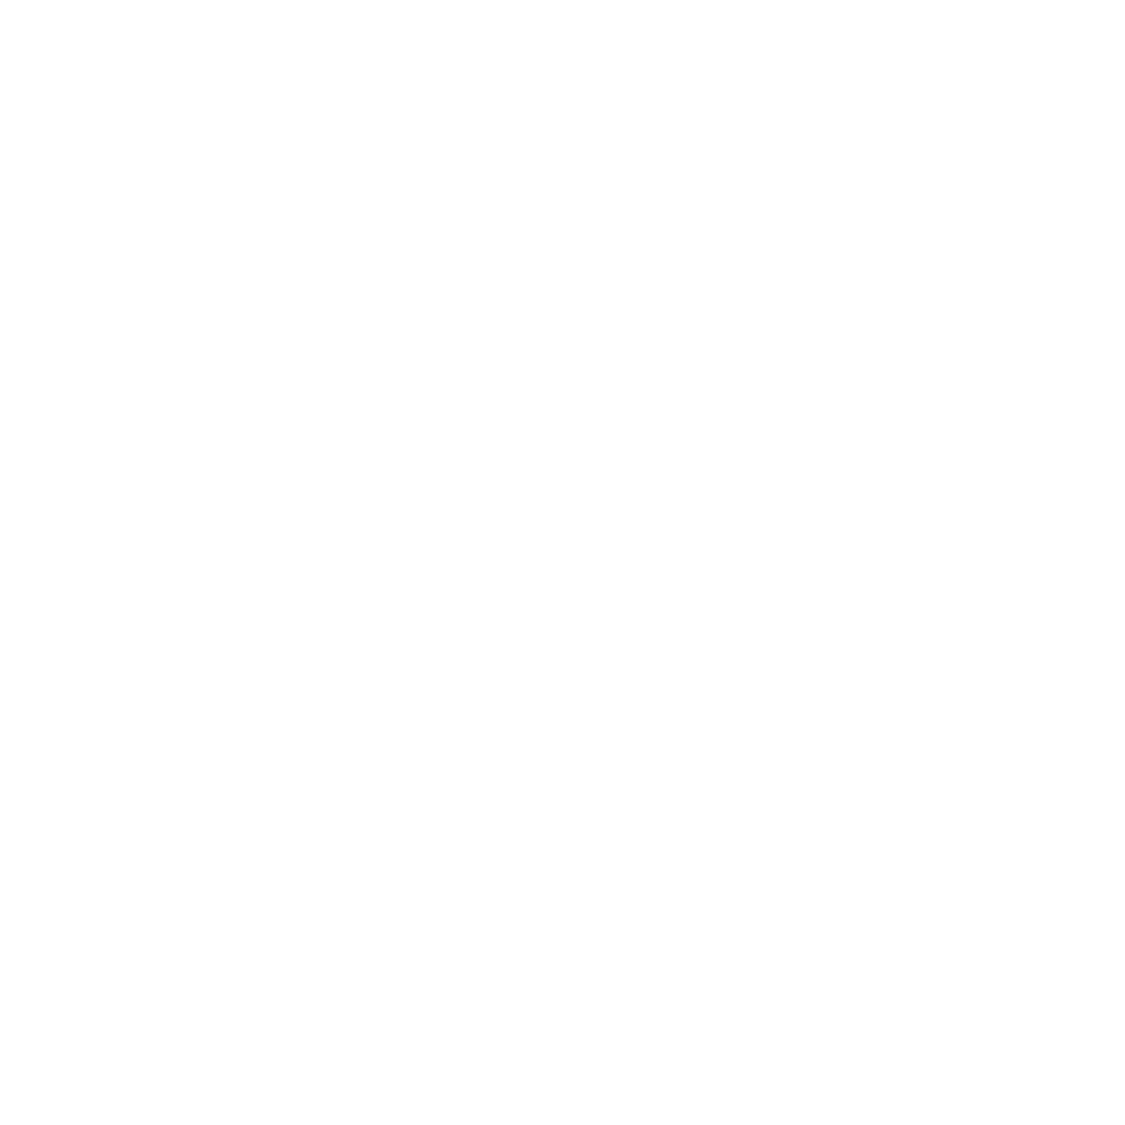 Shelton Properties